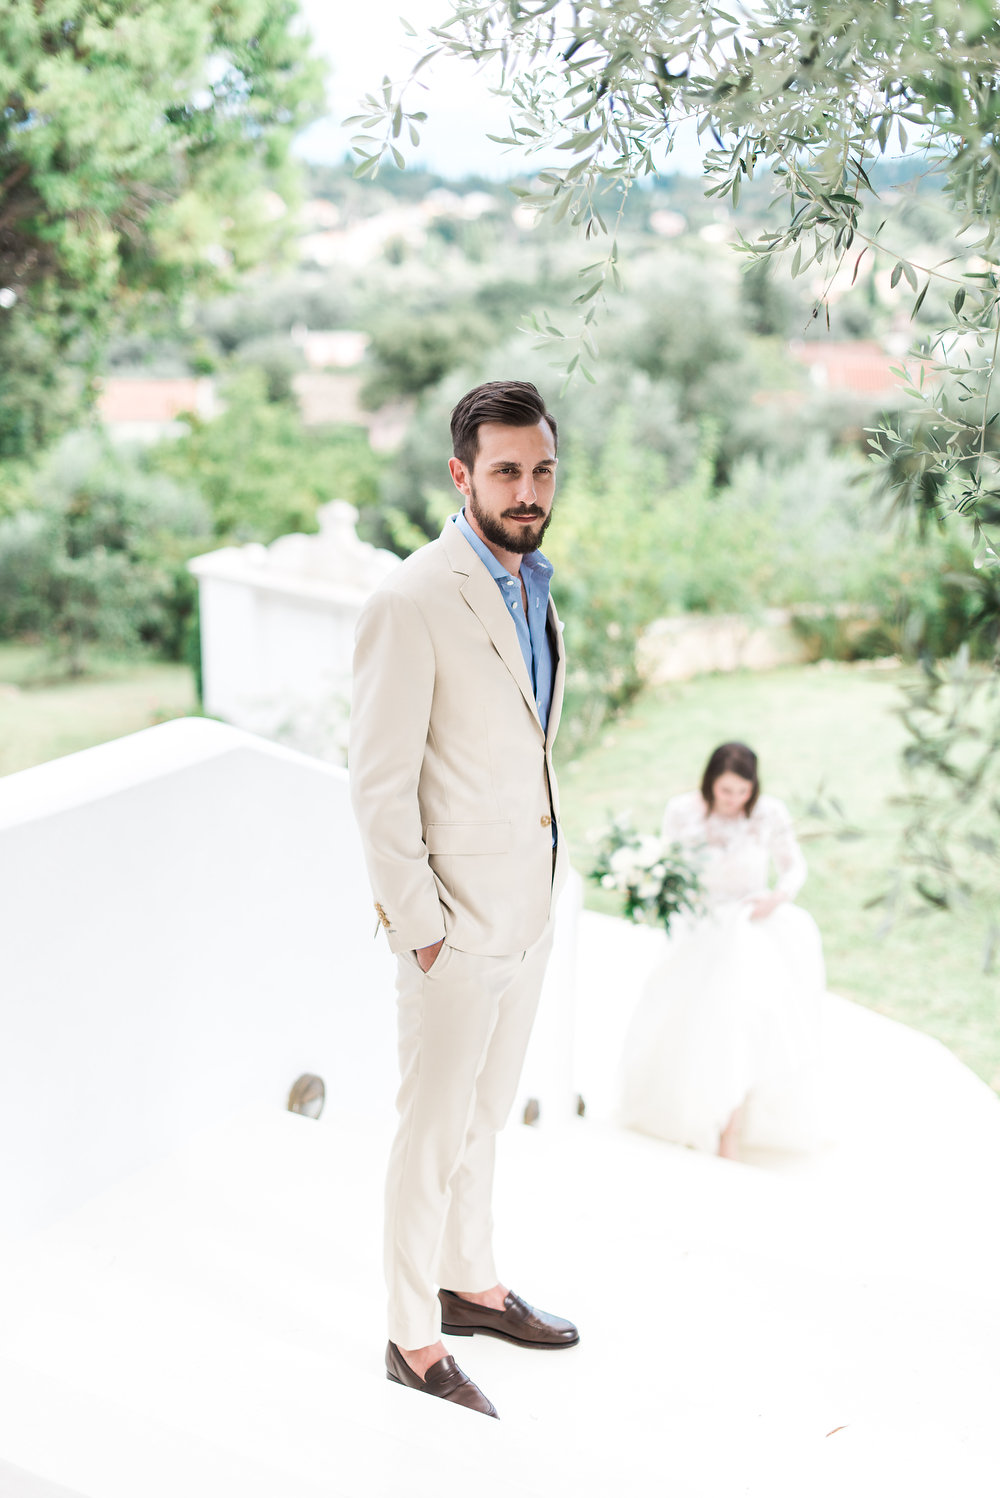 Corfu minimalistic wedding | Greece fine art film wedding photographer Les Anagnou15